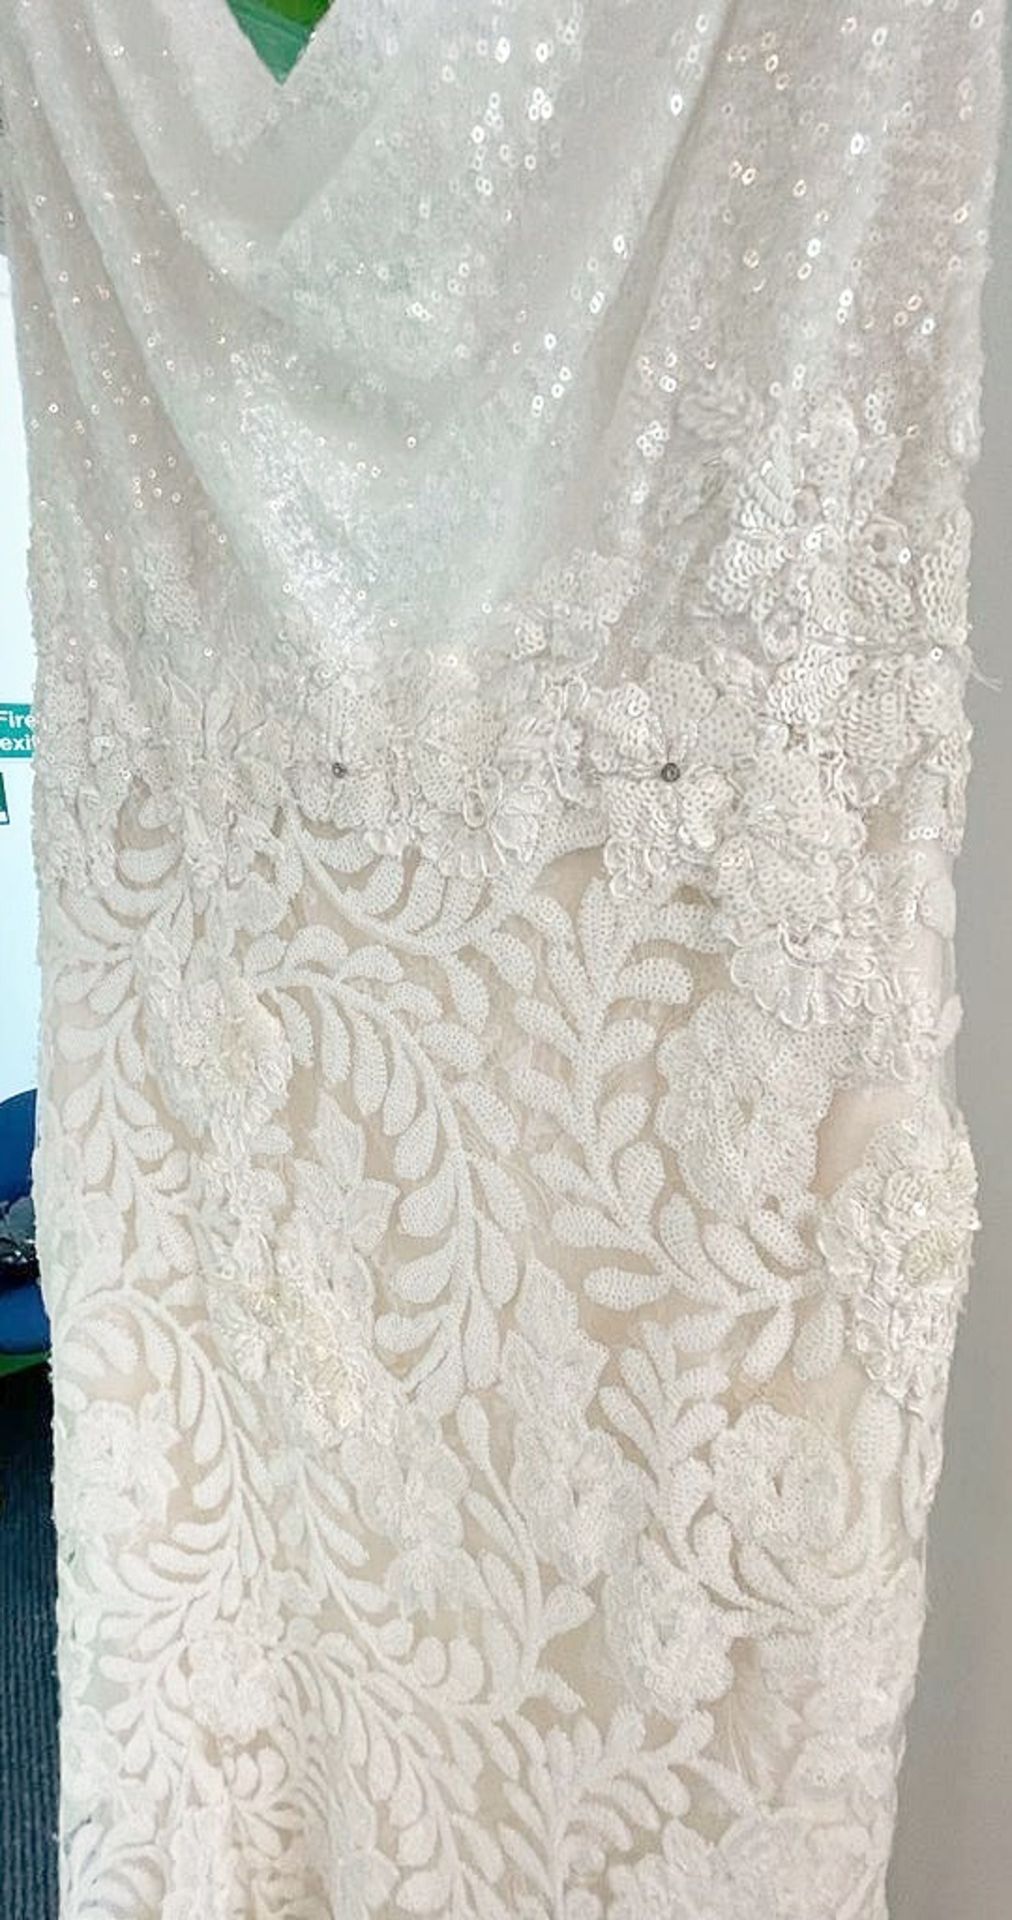 1 x LUSAN MANDONGUS 'Viola' Designer, Fishtail Wedding Dress Bridal Gown With Sequin Decoration - - Image 2 of 10